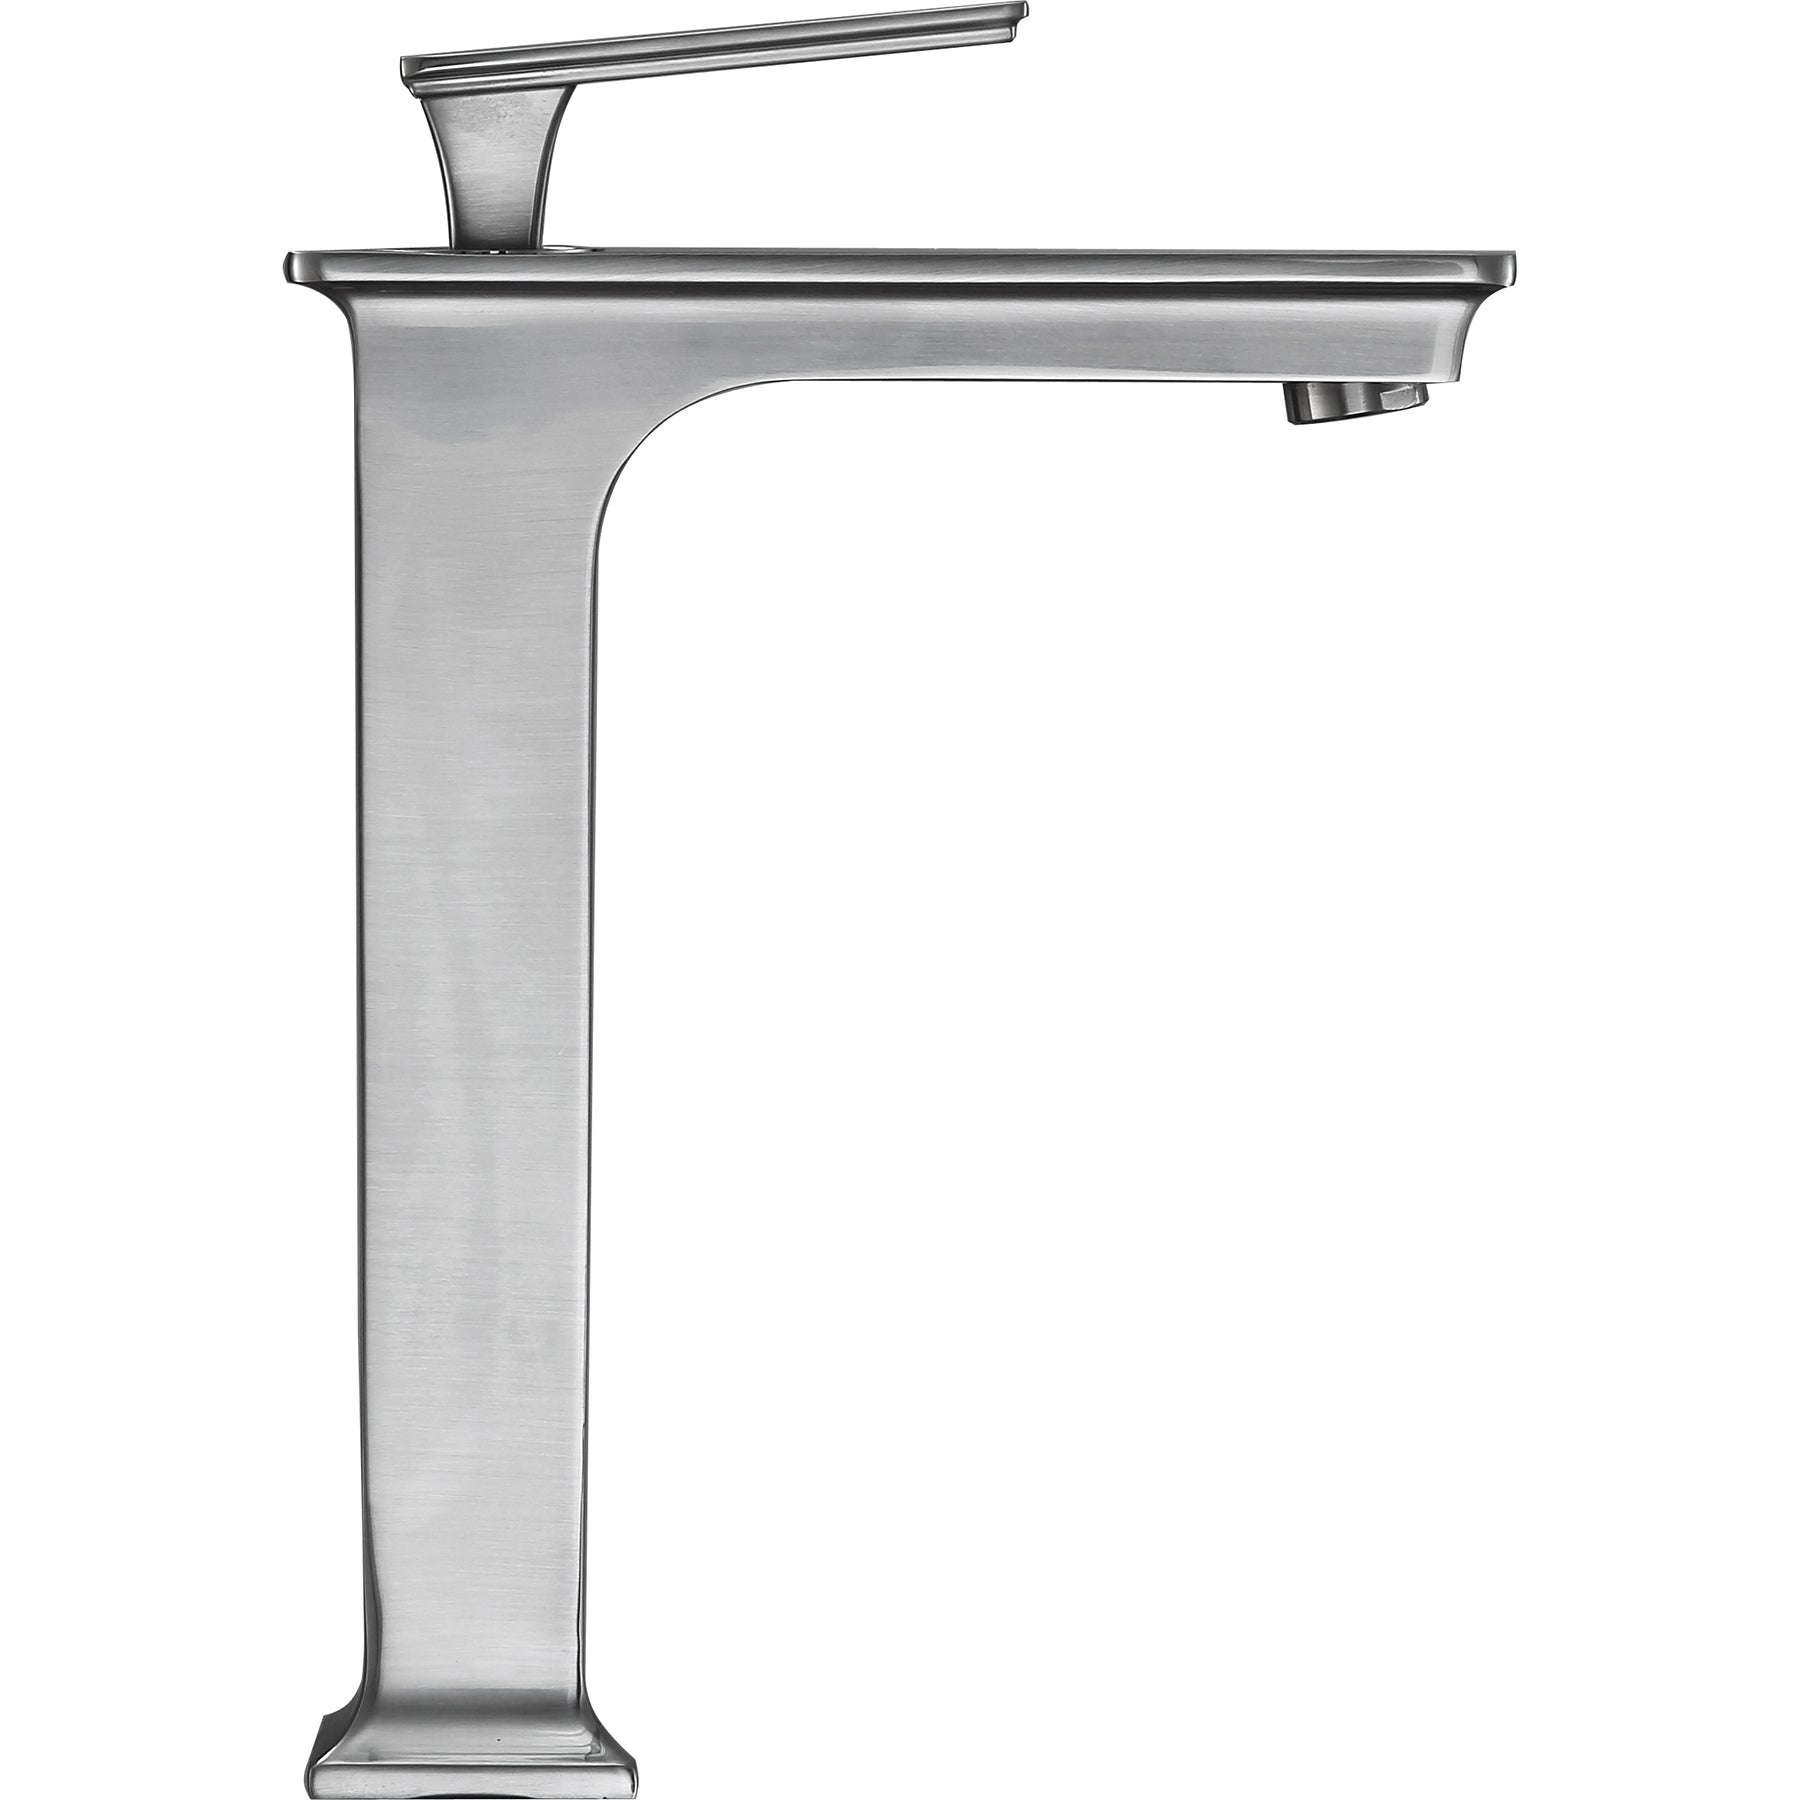 Saunter Single - Handle Single Hole Bathroom Vessel Sink Faucet in Brushed Nickel